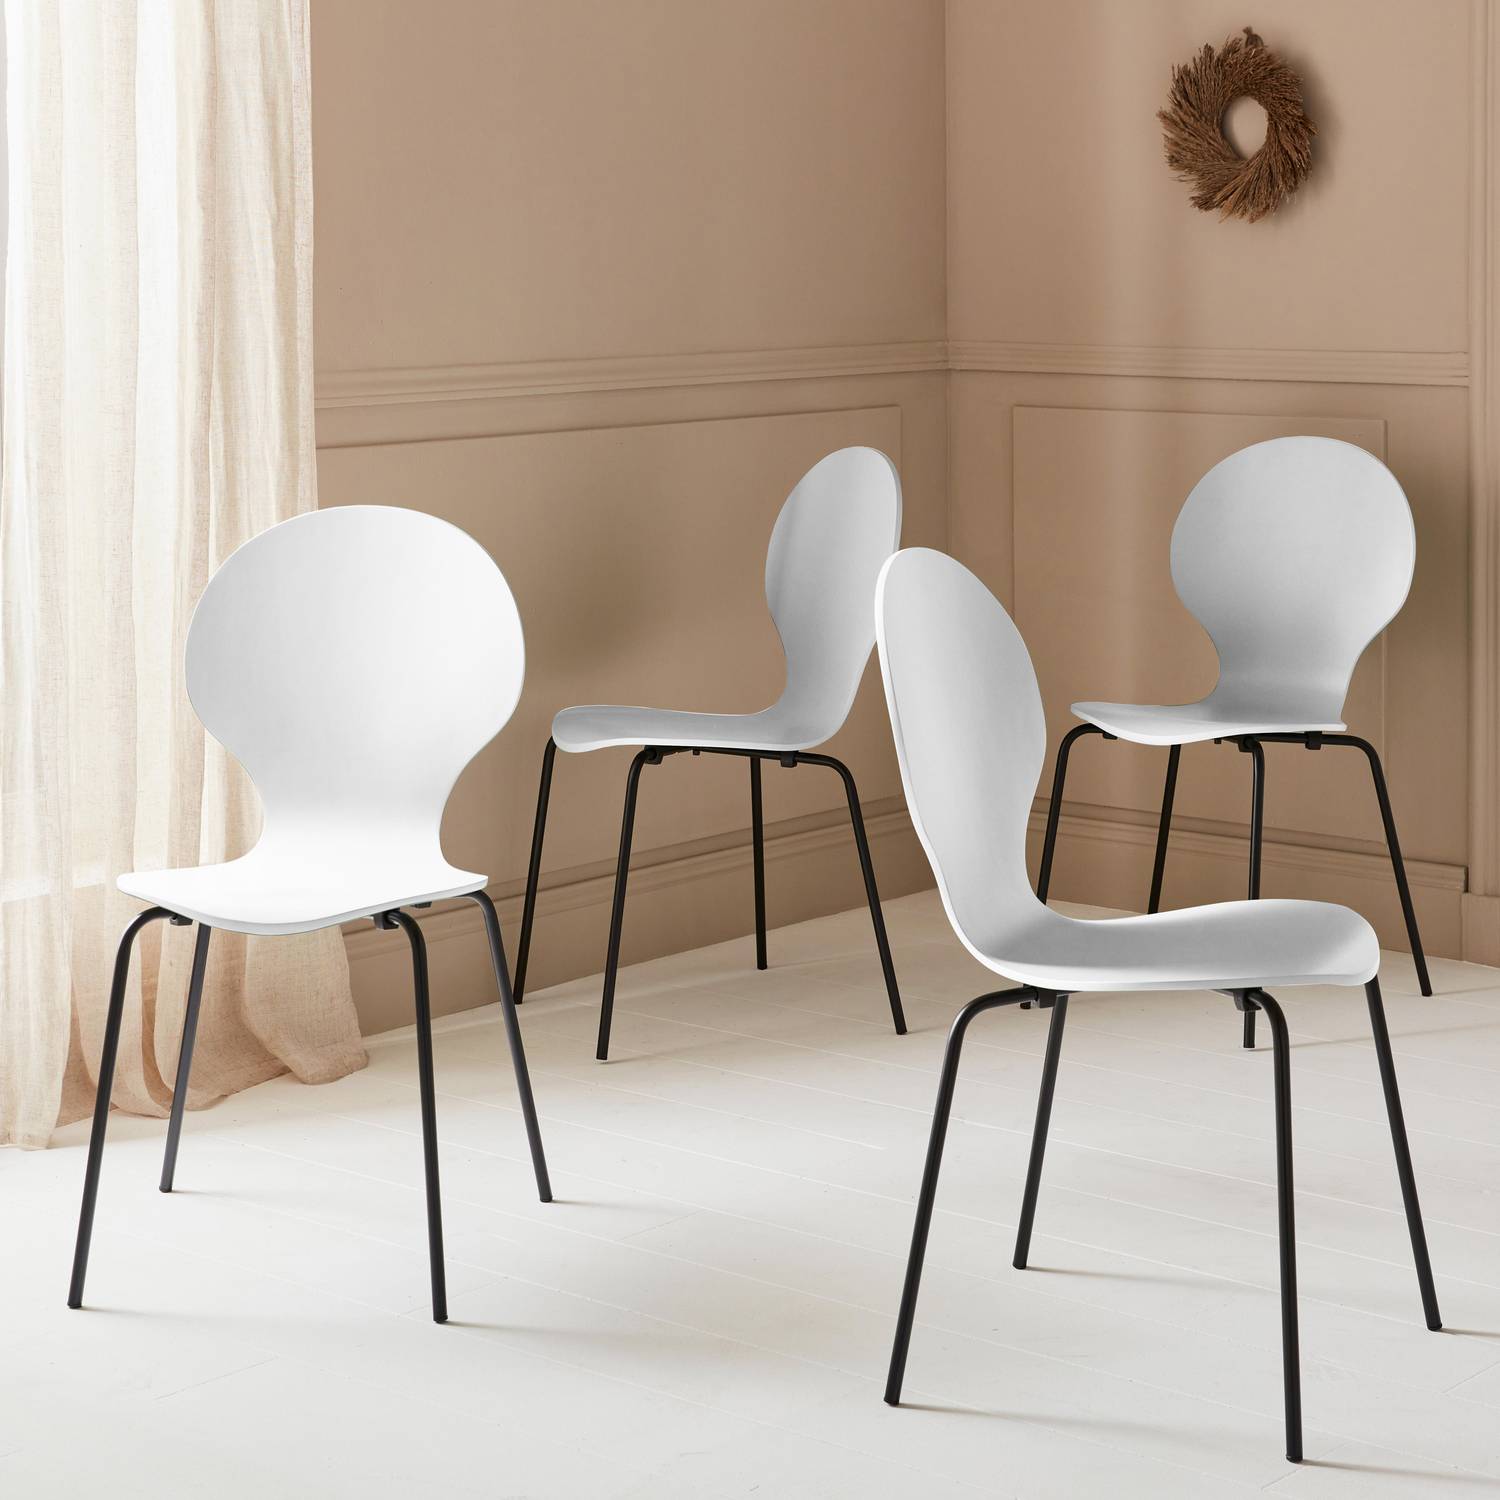 4er Set weiße stapelbare Retro-Stühle, Hevea-Holz und Sperrholz, Stahlbeine, Naomi, B 43 x T 48 x H 87cm Photo2